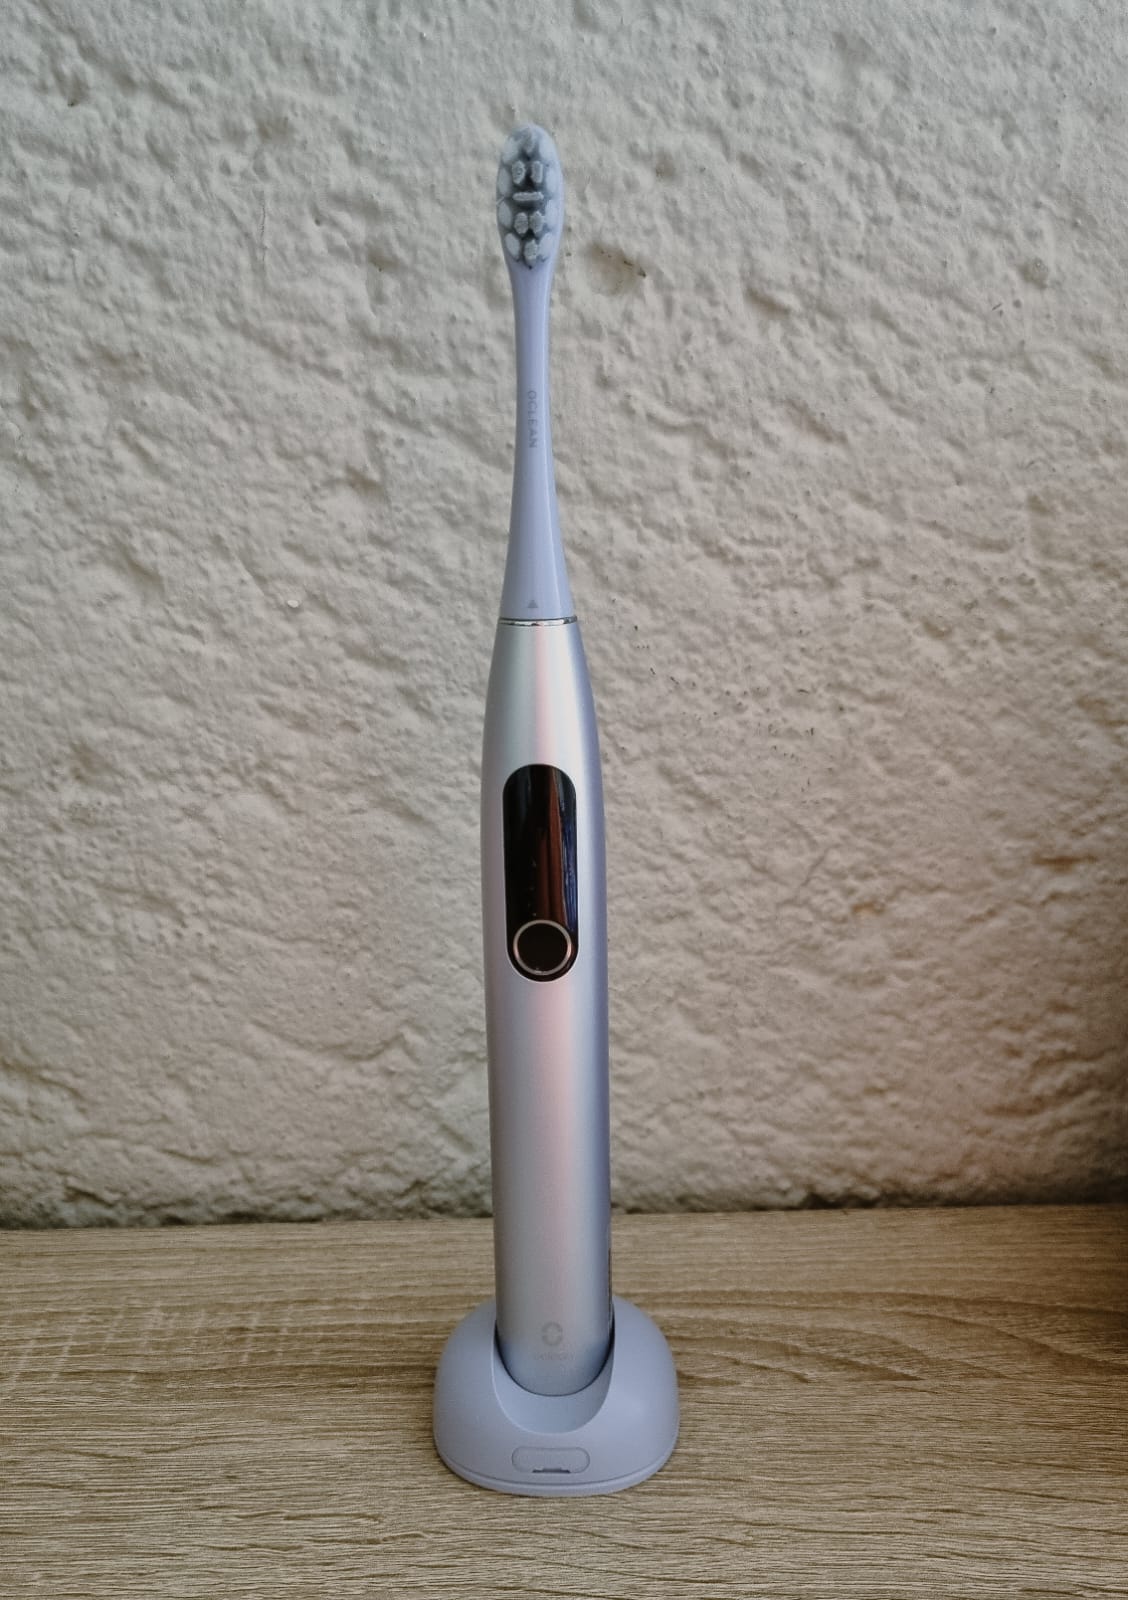 OCLEAN X Pro Digital Sonic Toothbrush